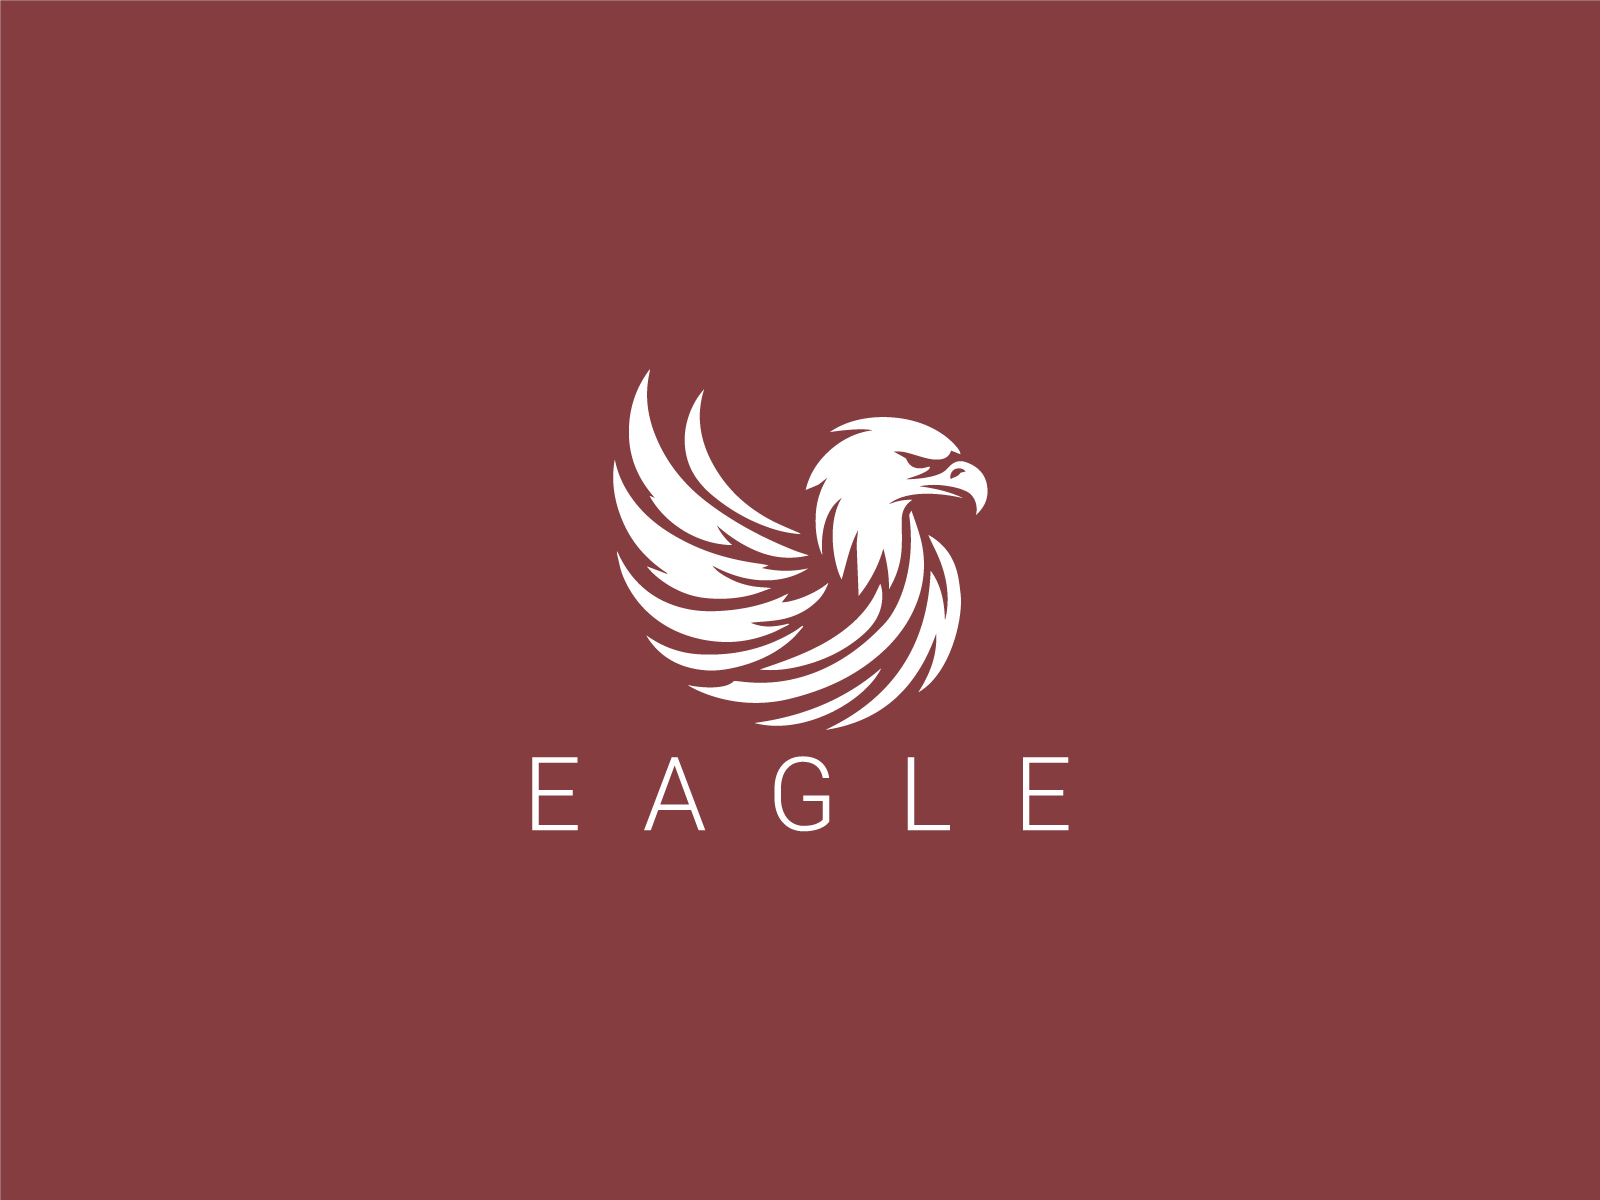 Phoenix Flying Bird Vector, Red Eagle Open Wings Logo Design Vector  Illustration on White Background Stock Vector - Illustration of vogel,  freedom: 183531070